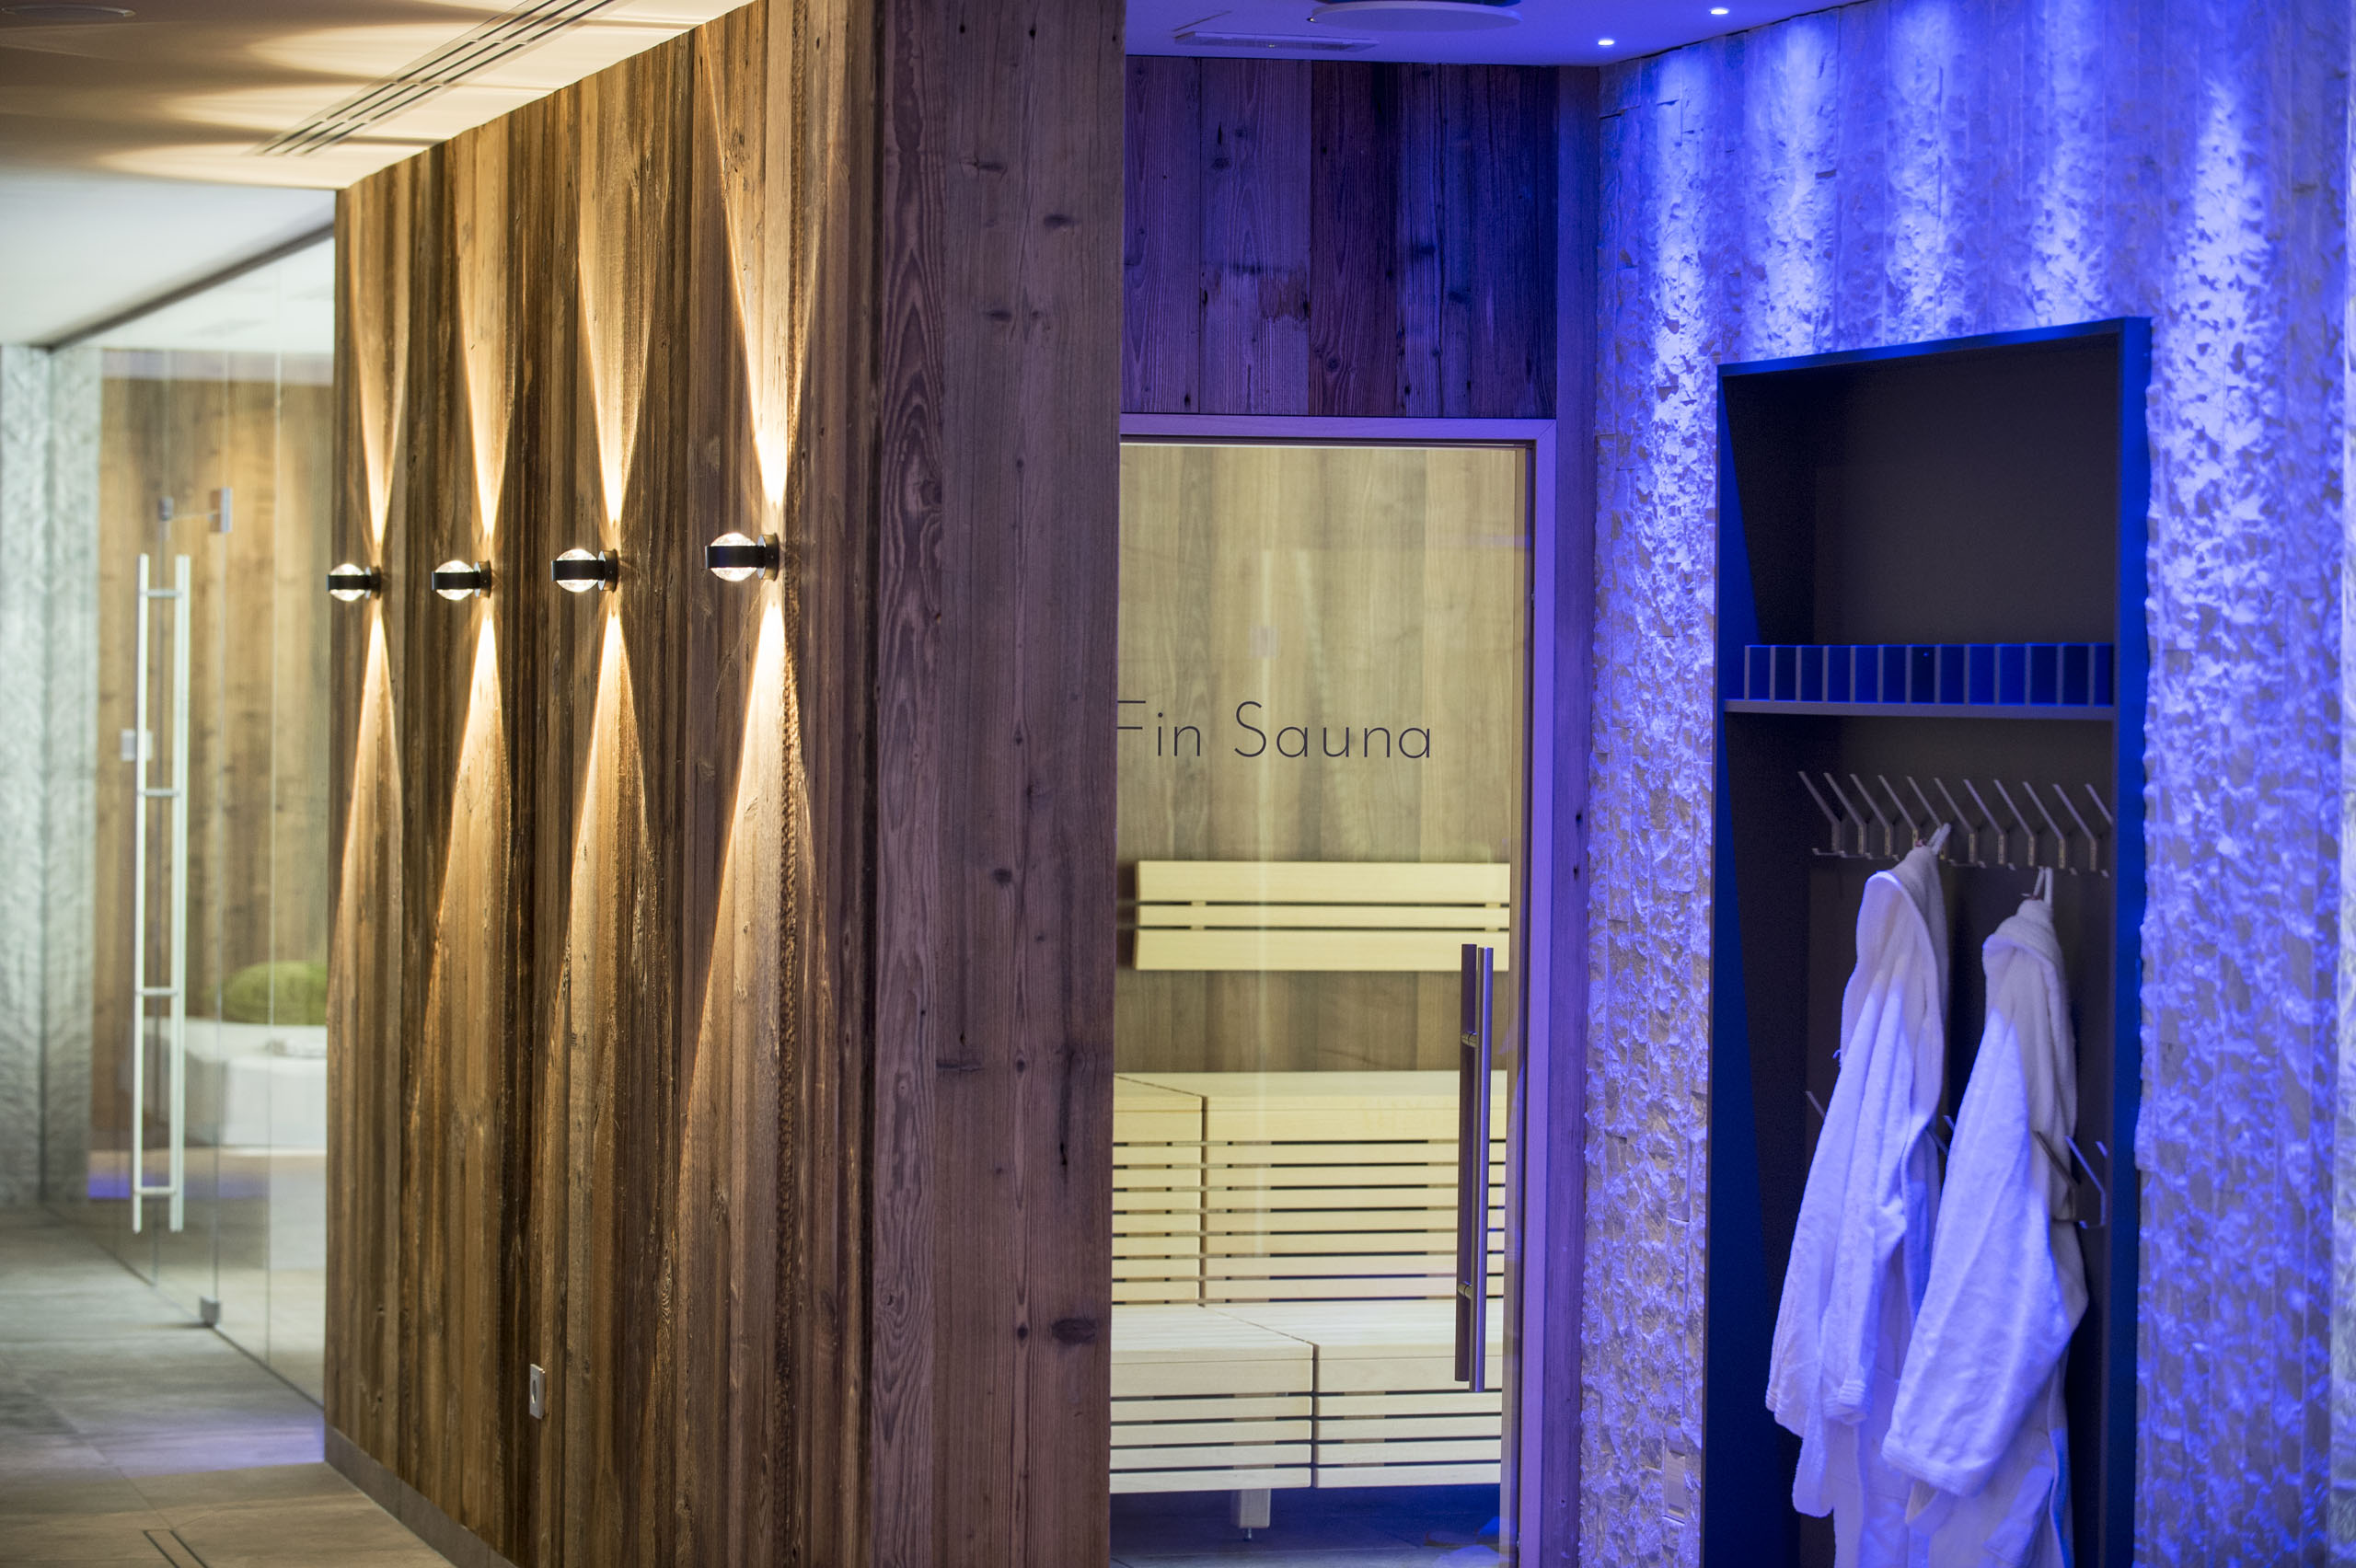 My SPA hotel My Arbor, South Tyrol, Italy » Five saunas